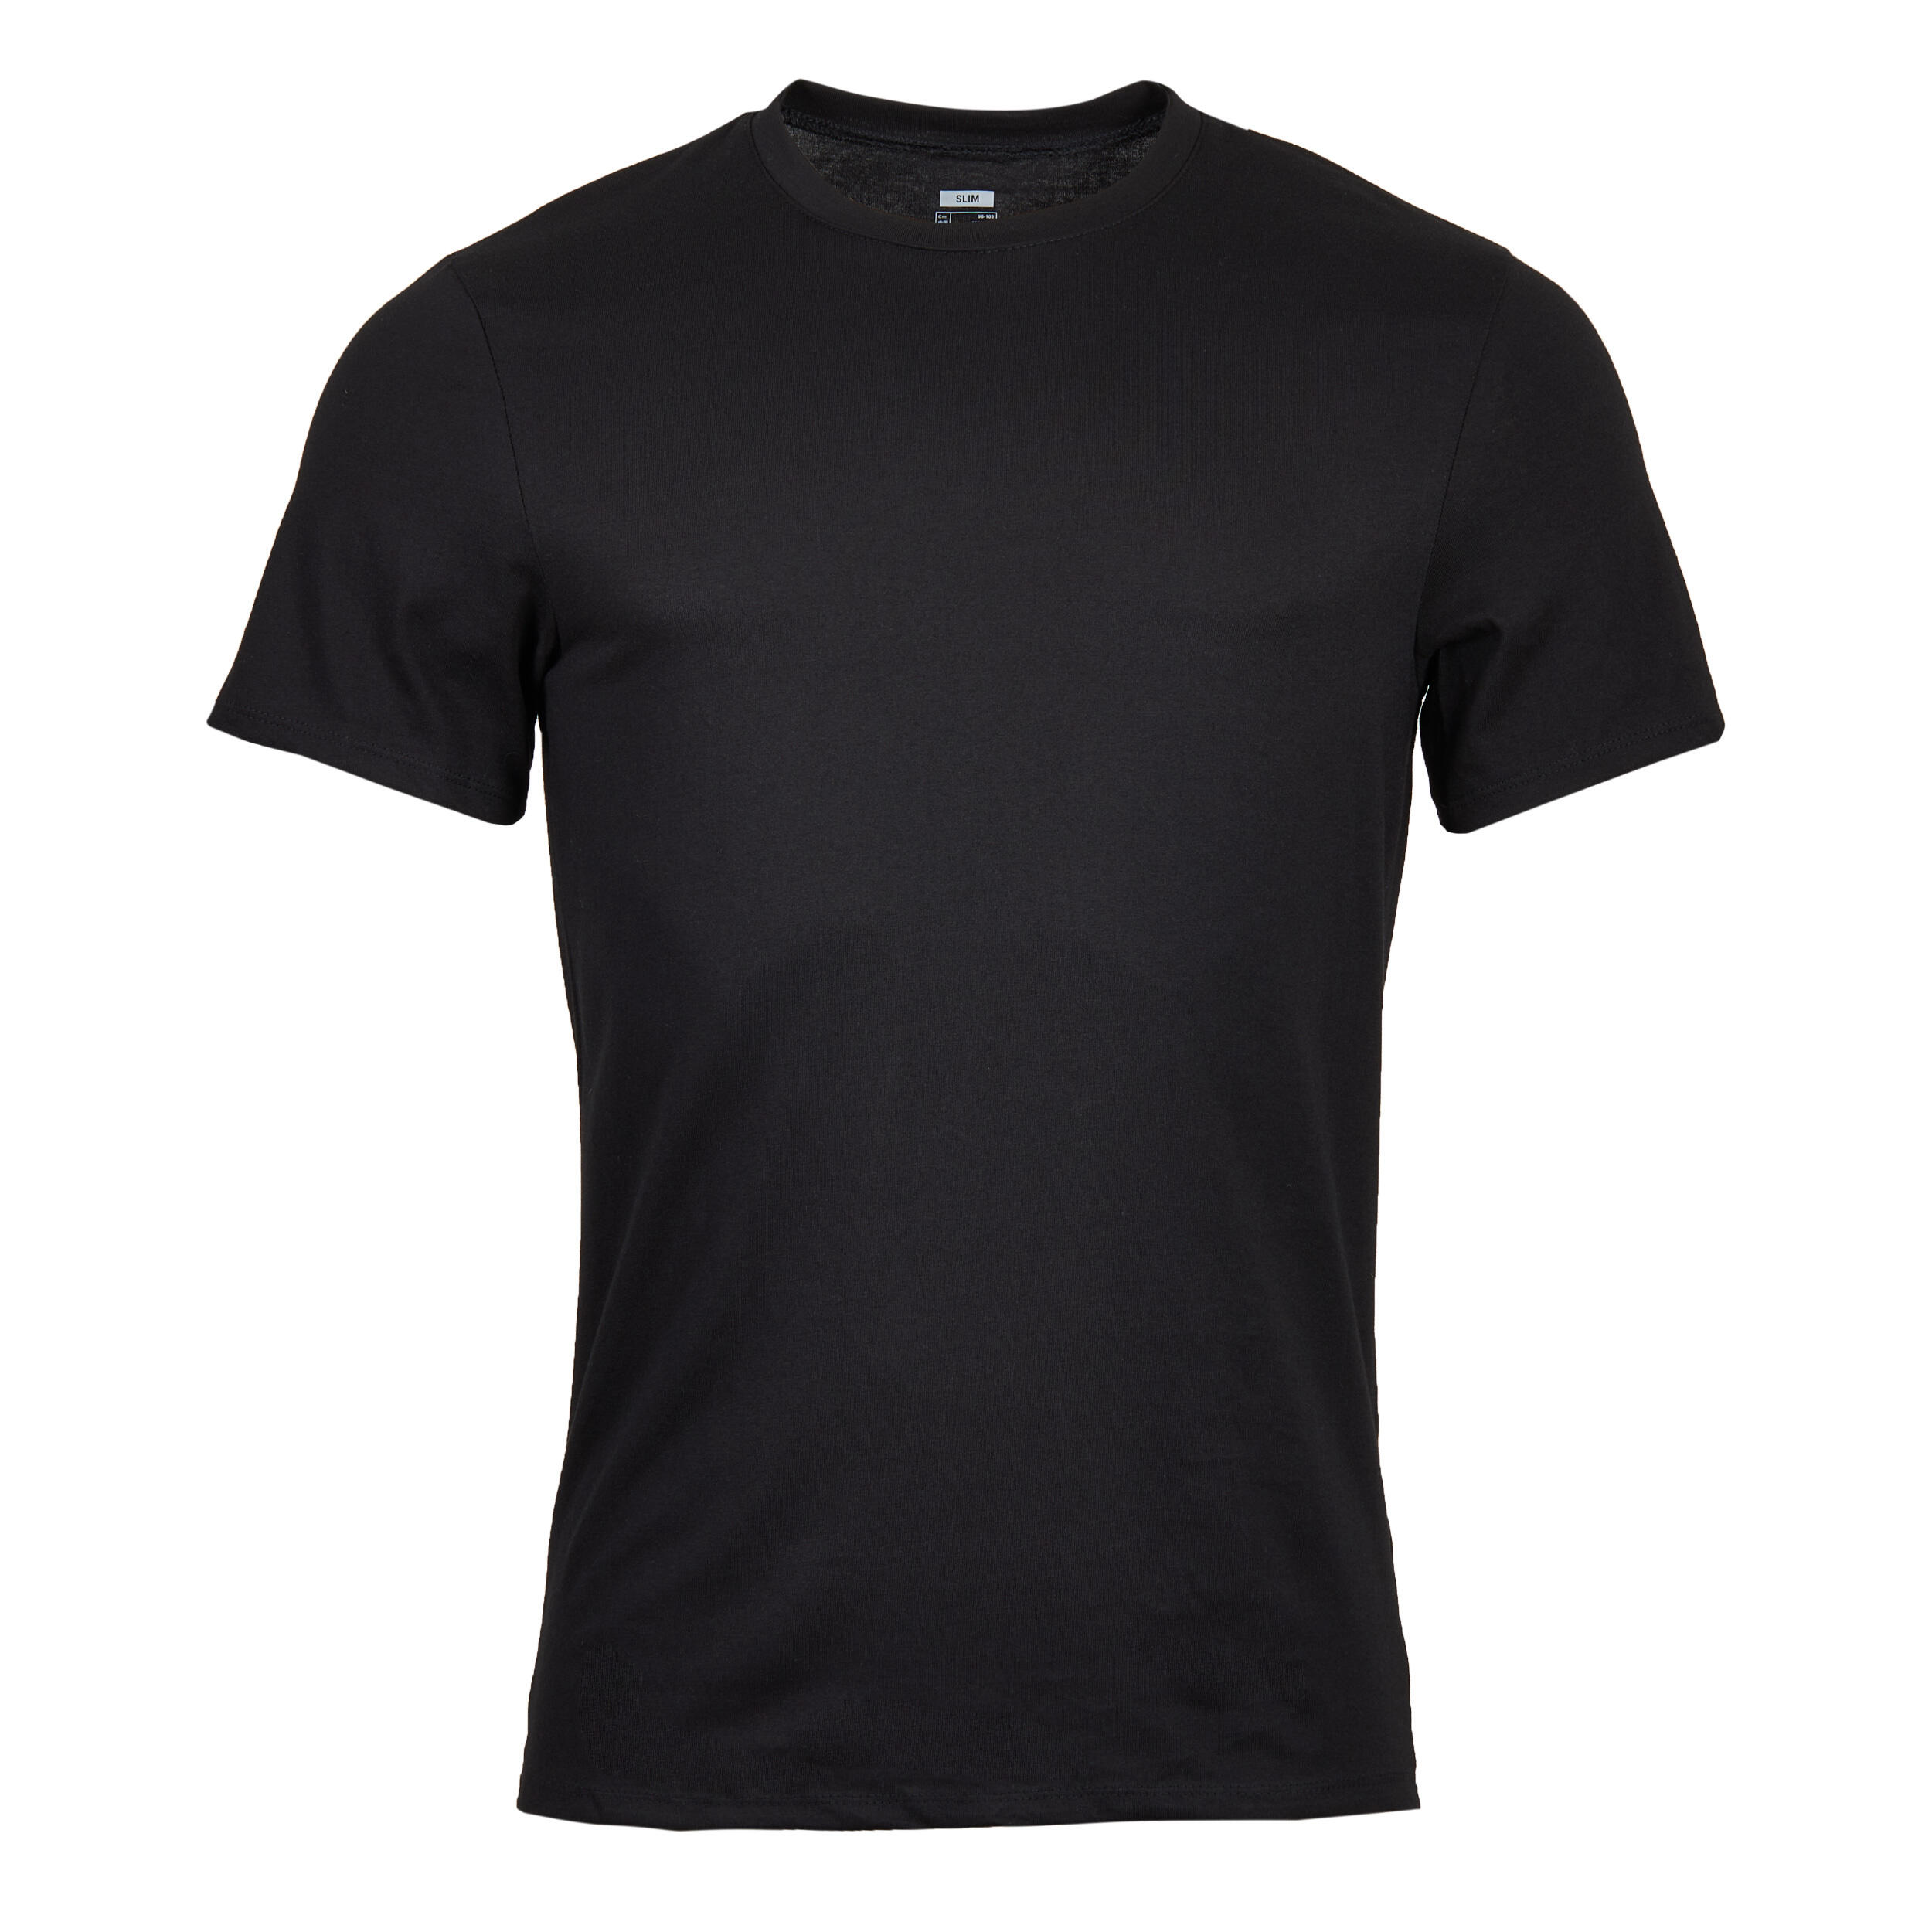 Men's Slim-Fit Fitness T-Shirt 500 - Black 5/19